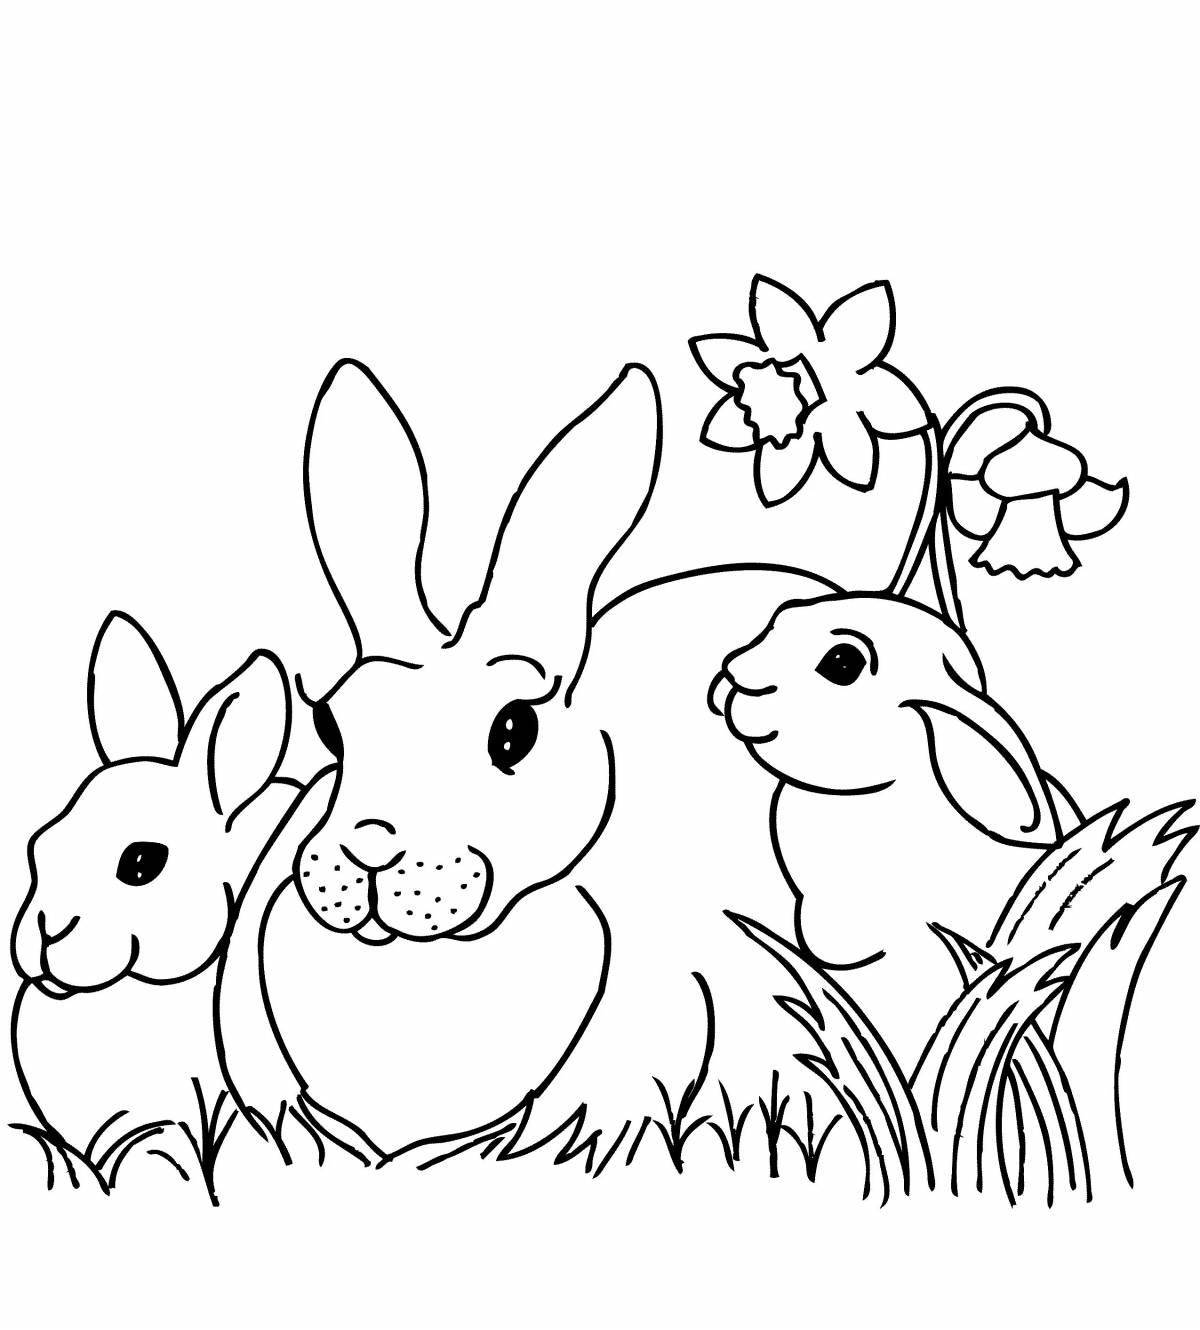 Peaceful hare family